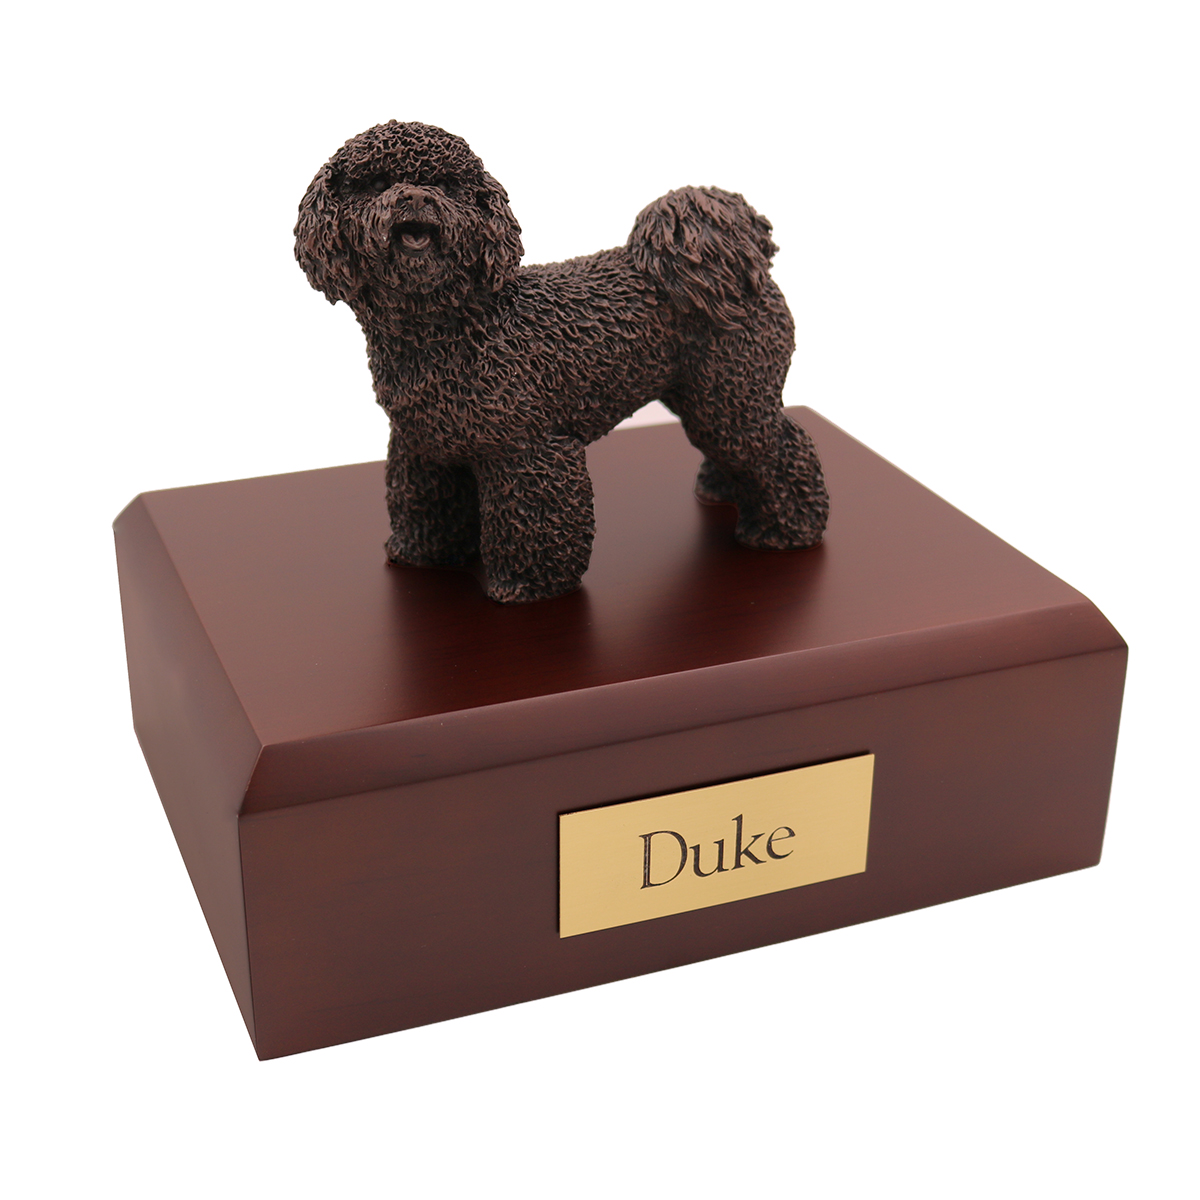 Dog, Bichon Frise, Bronze - Figurine Urn